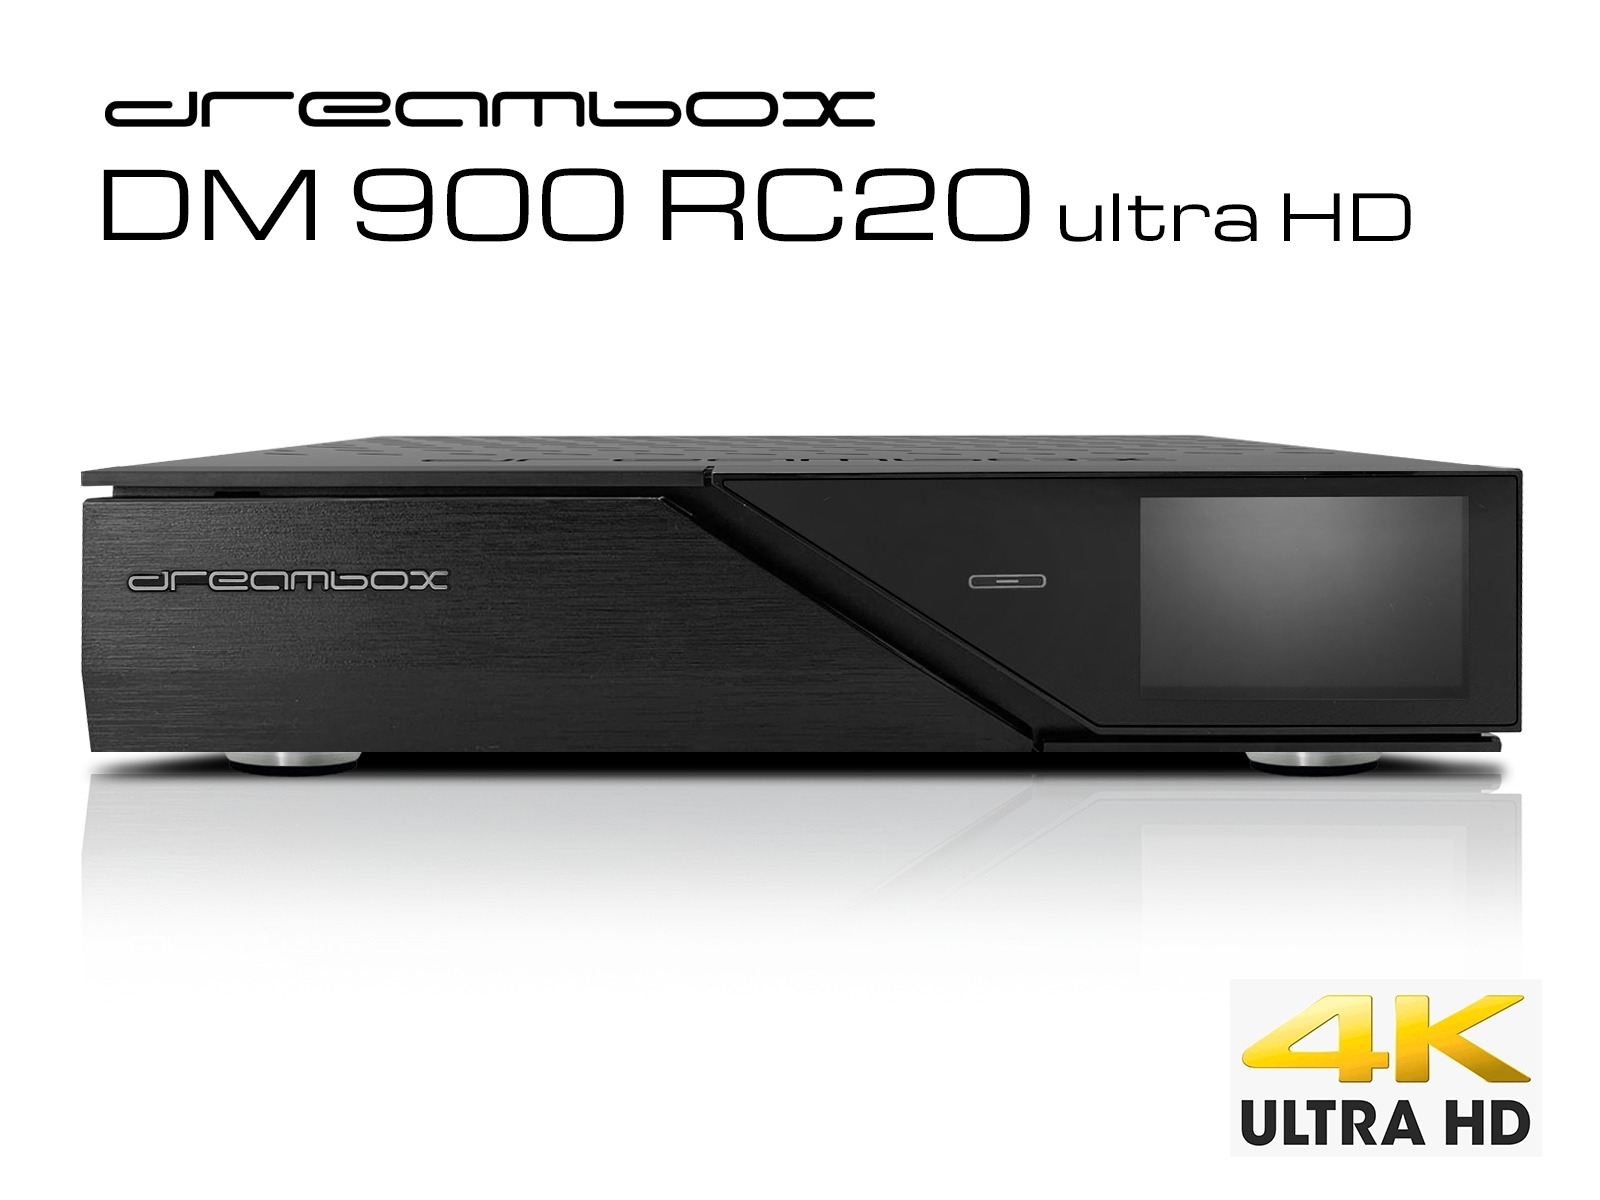 Dreambox DM900 RC20 UHD 4K 1x DVB-C FBC Tuner E2 Linux PVR ready Receiver Dreambox DM900 RC20 UHD 4K 1x DVB-C FBC Tuner 2TB HDD E2 Linux PVR Receiver